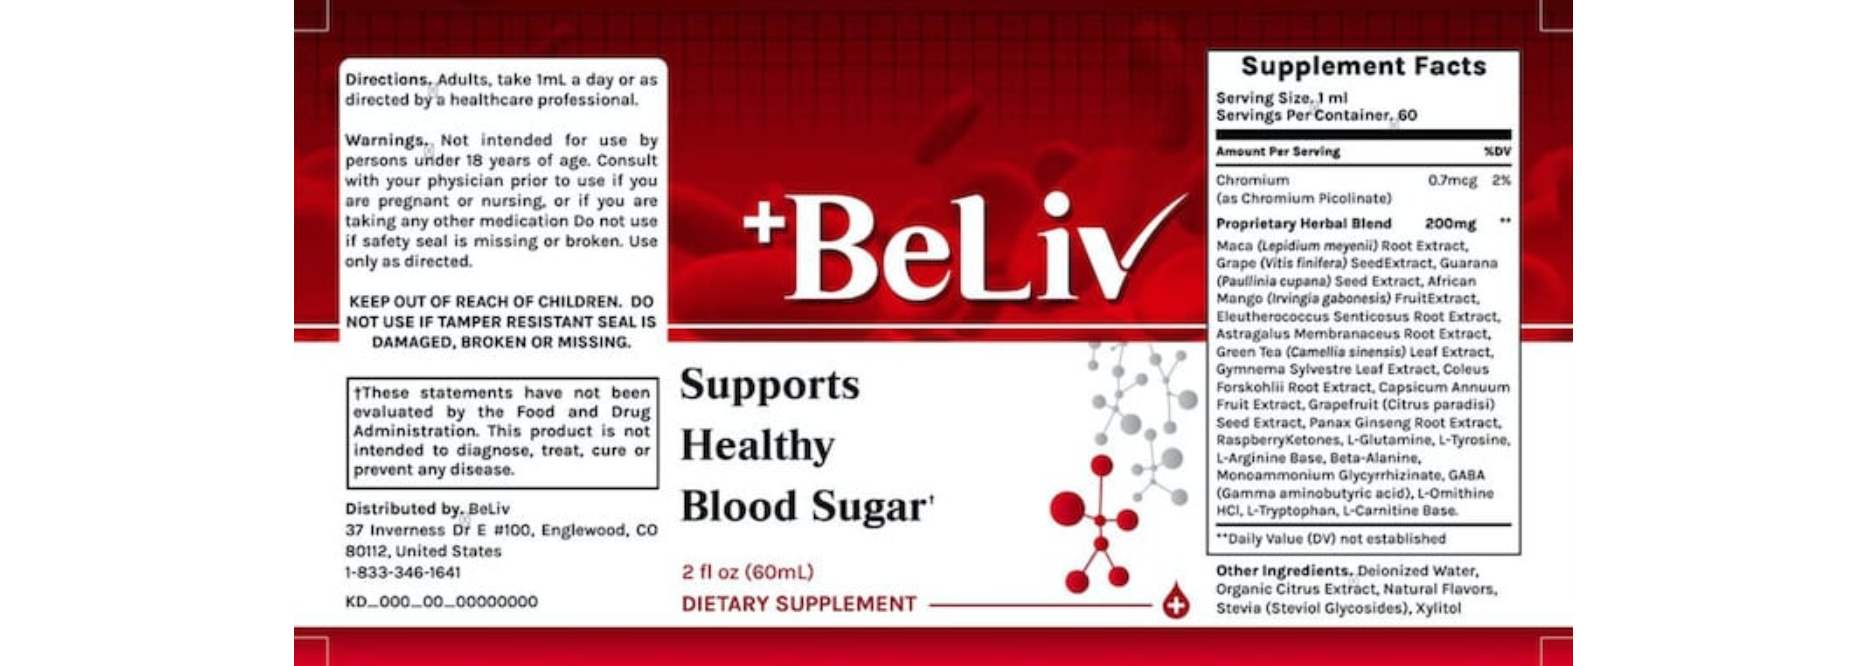 BeLiv Supplement Facts